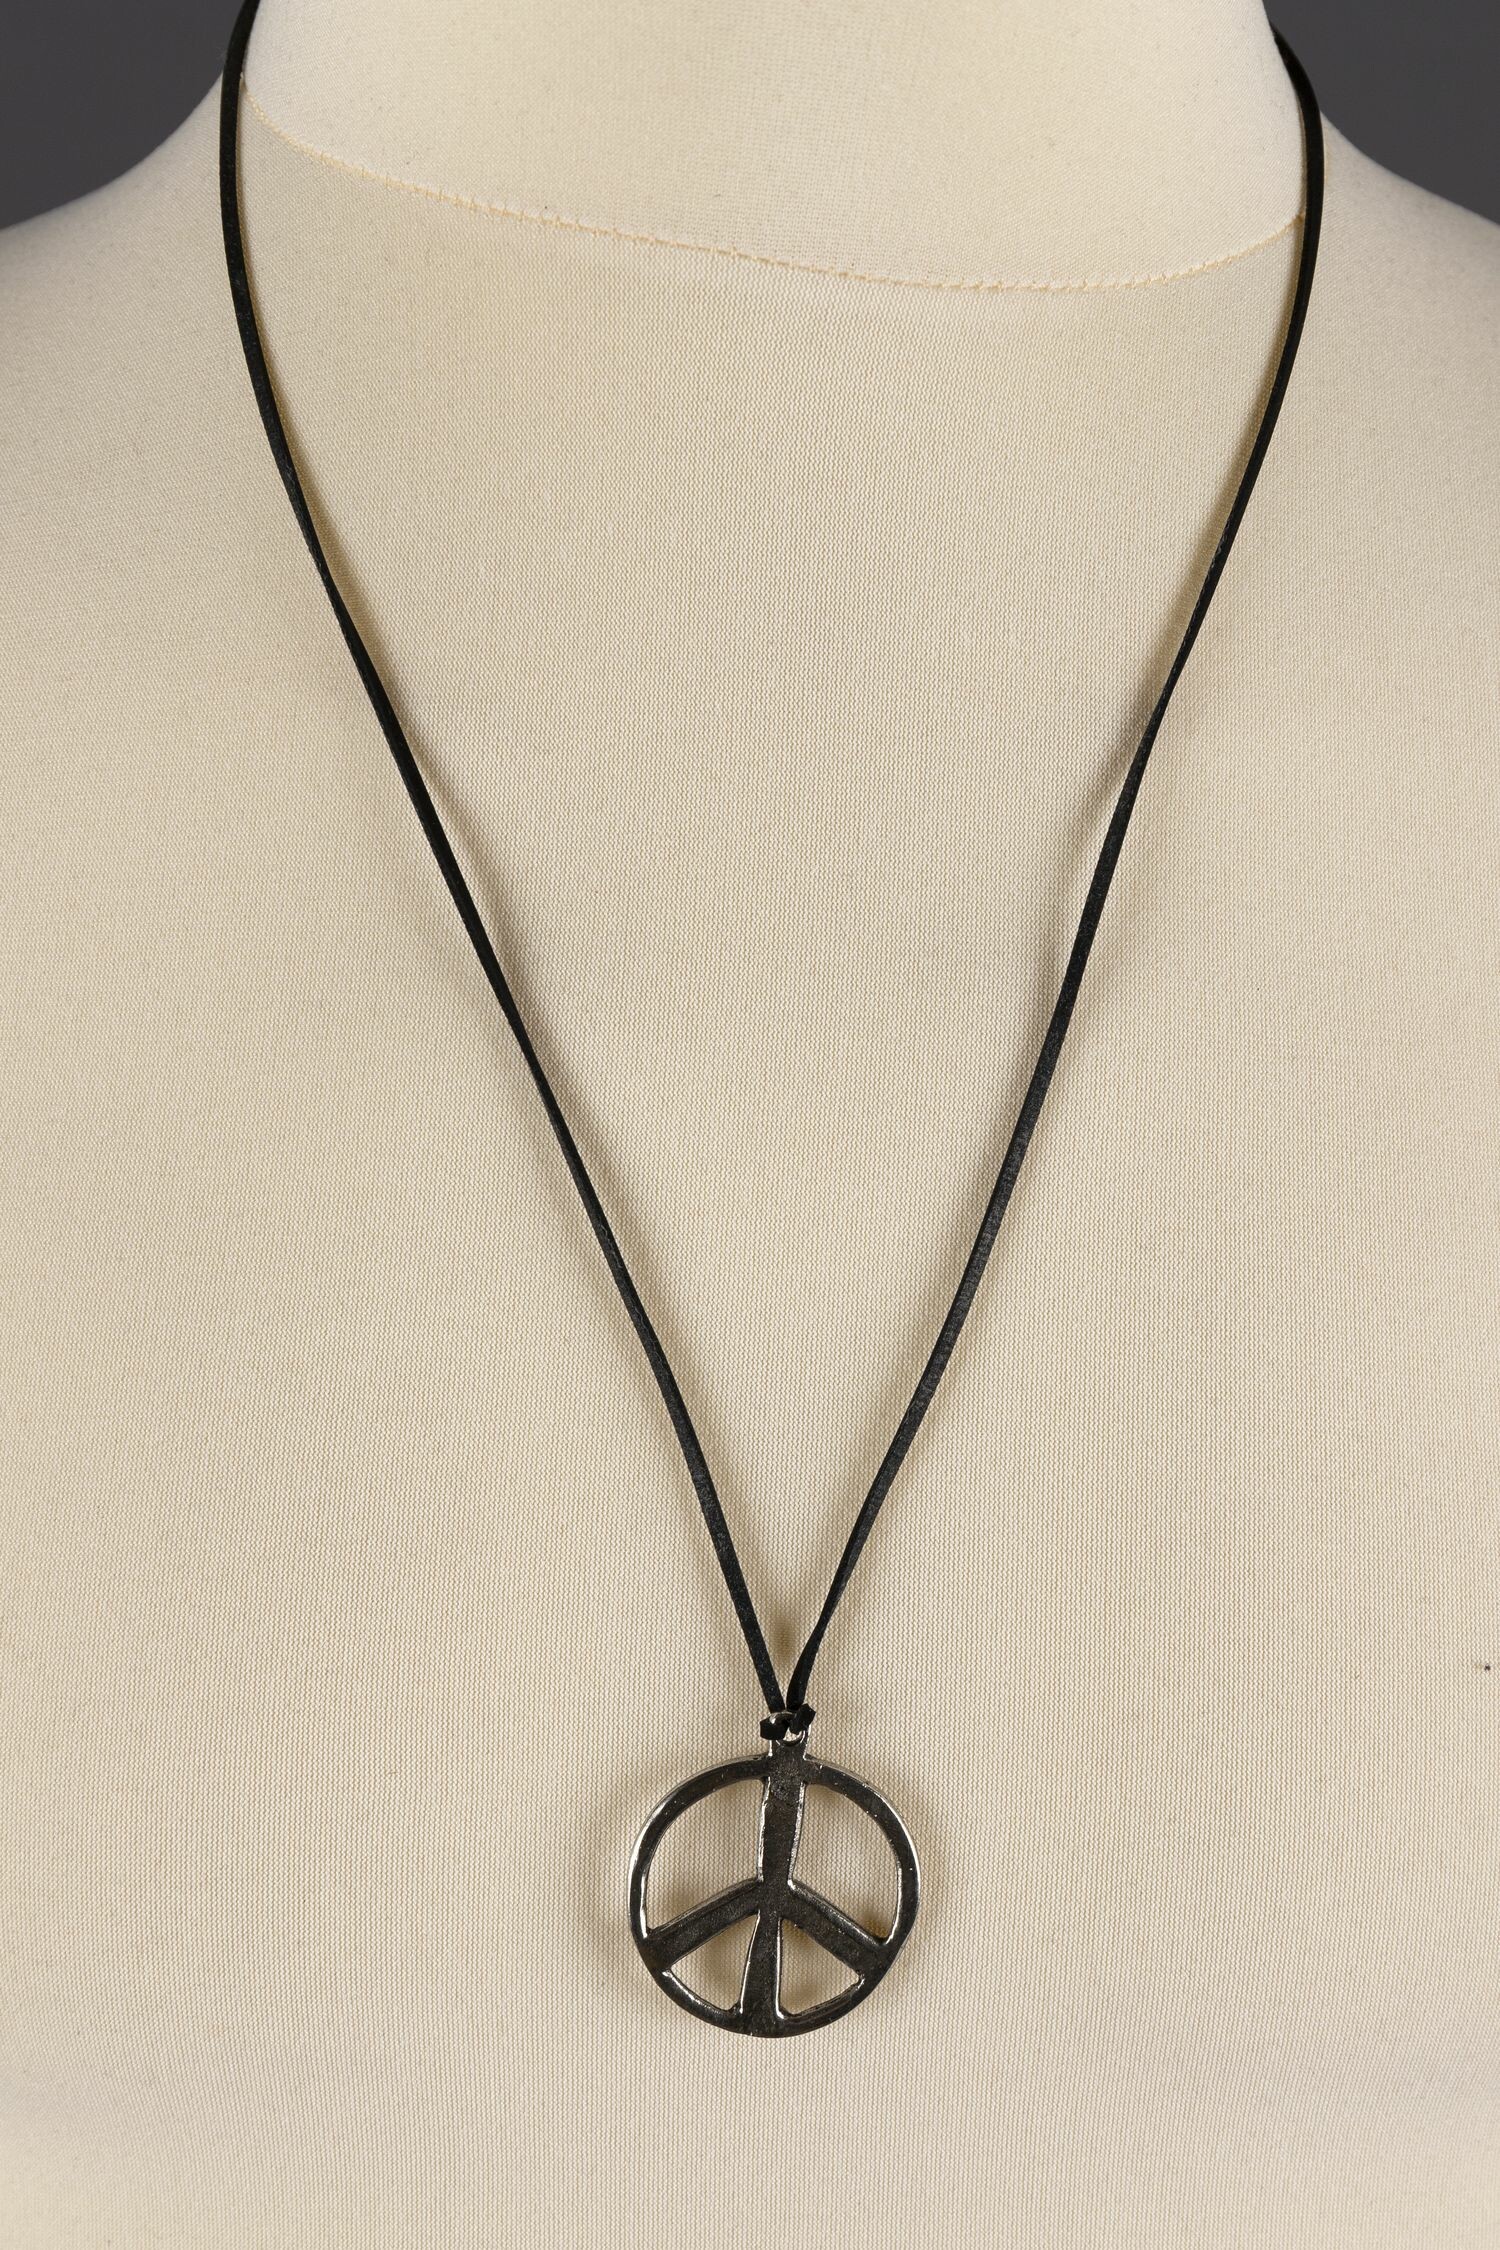 Medál, nyaklánc (Rippl-Rónai Múzeum CC BY-NC-ND)